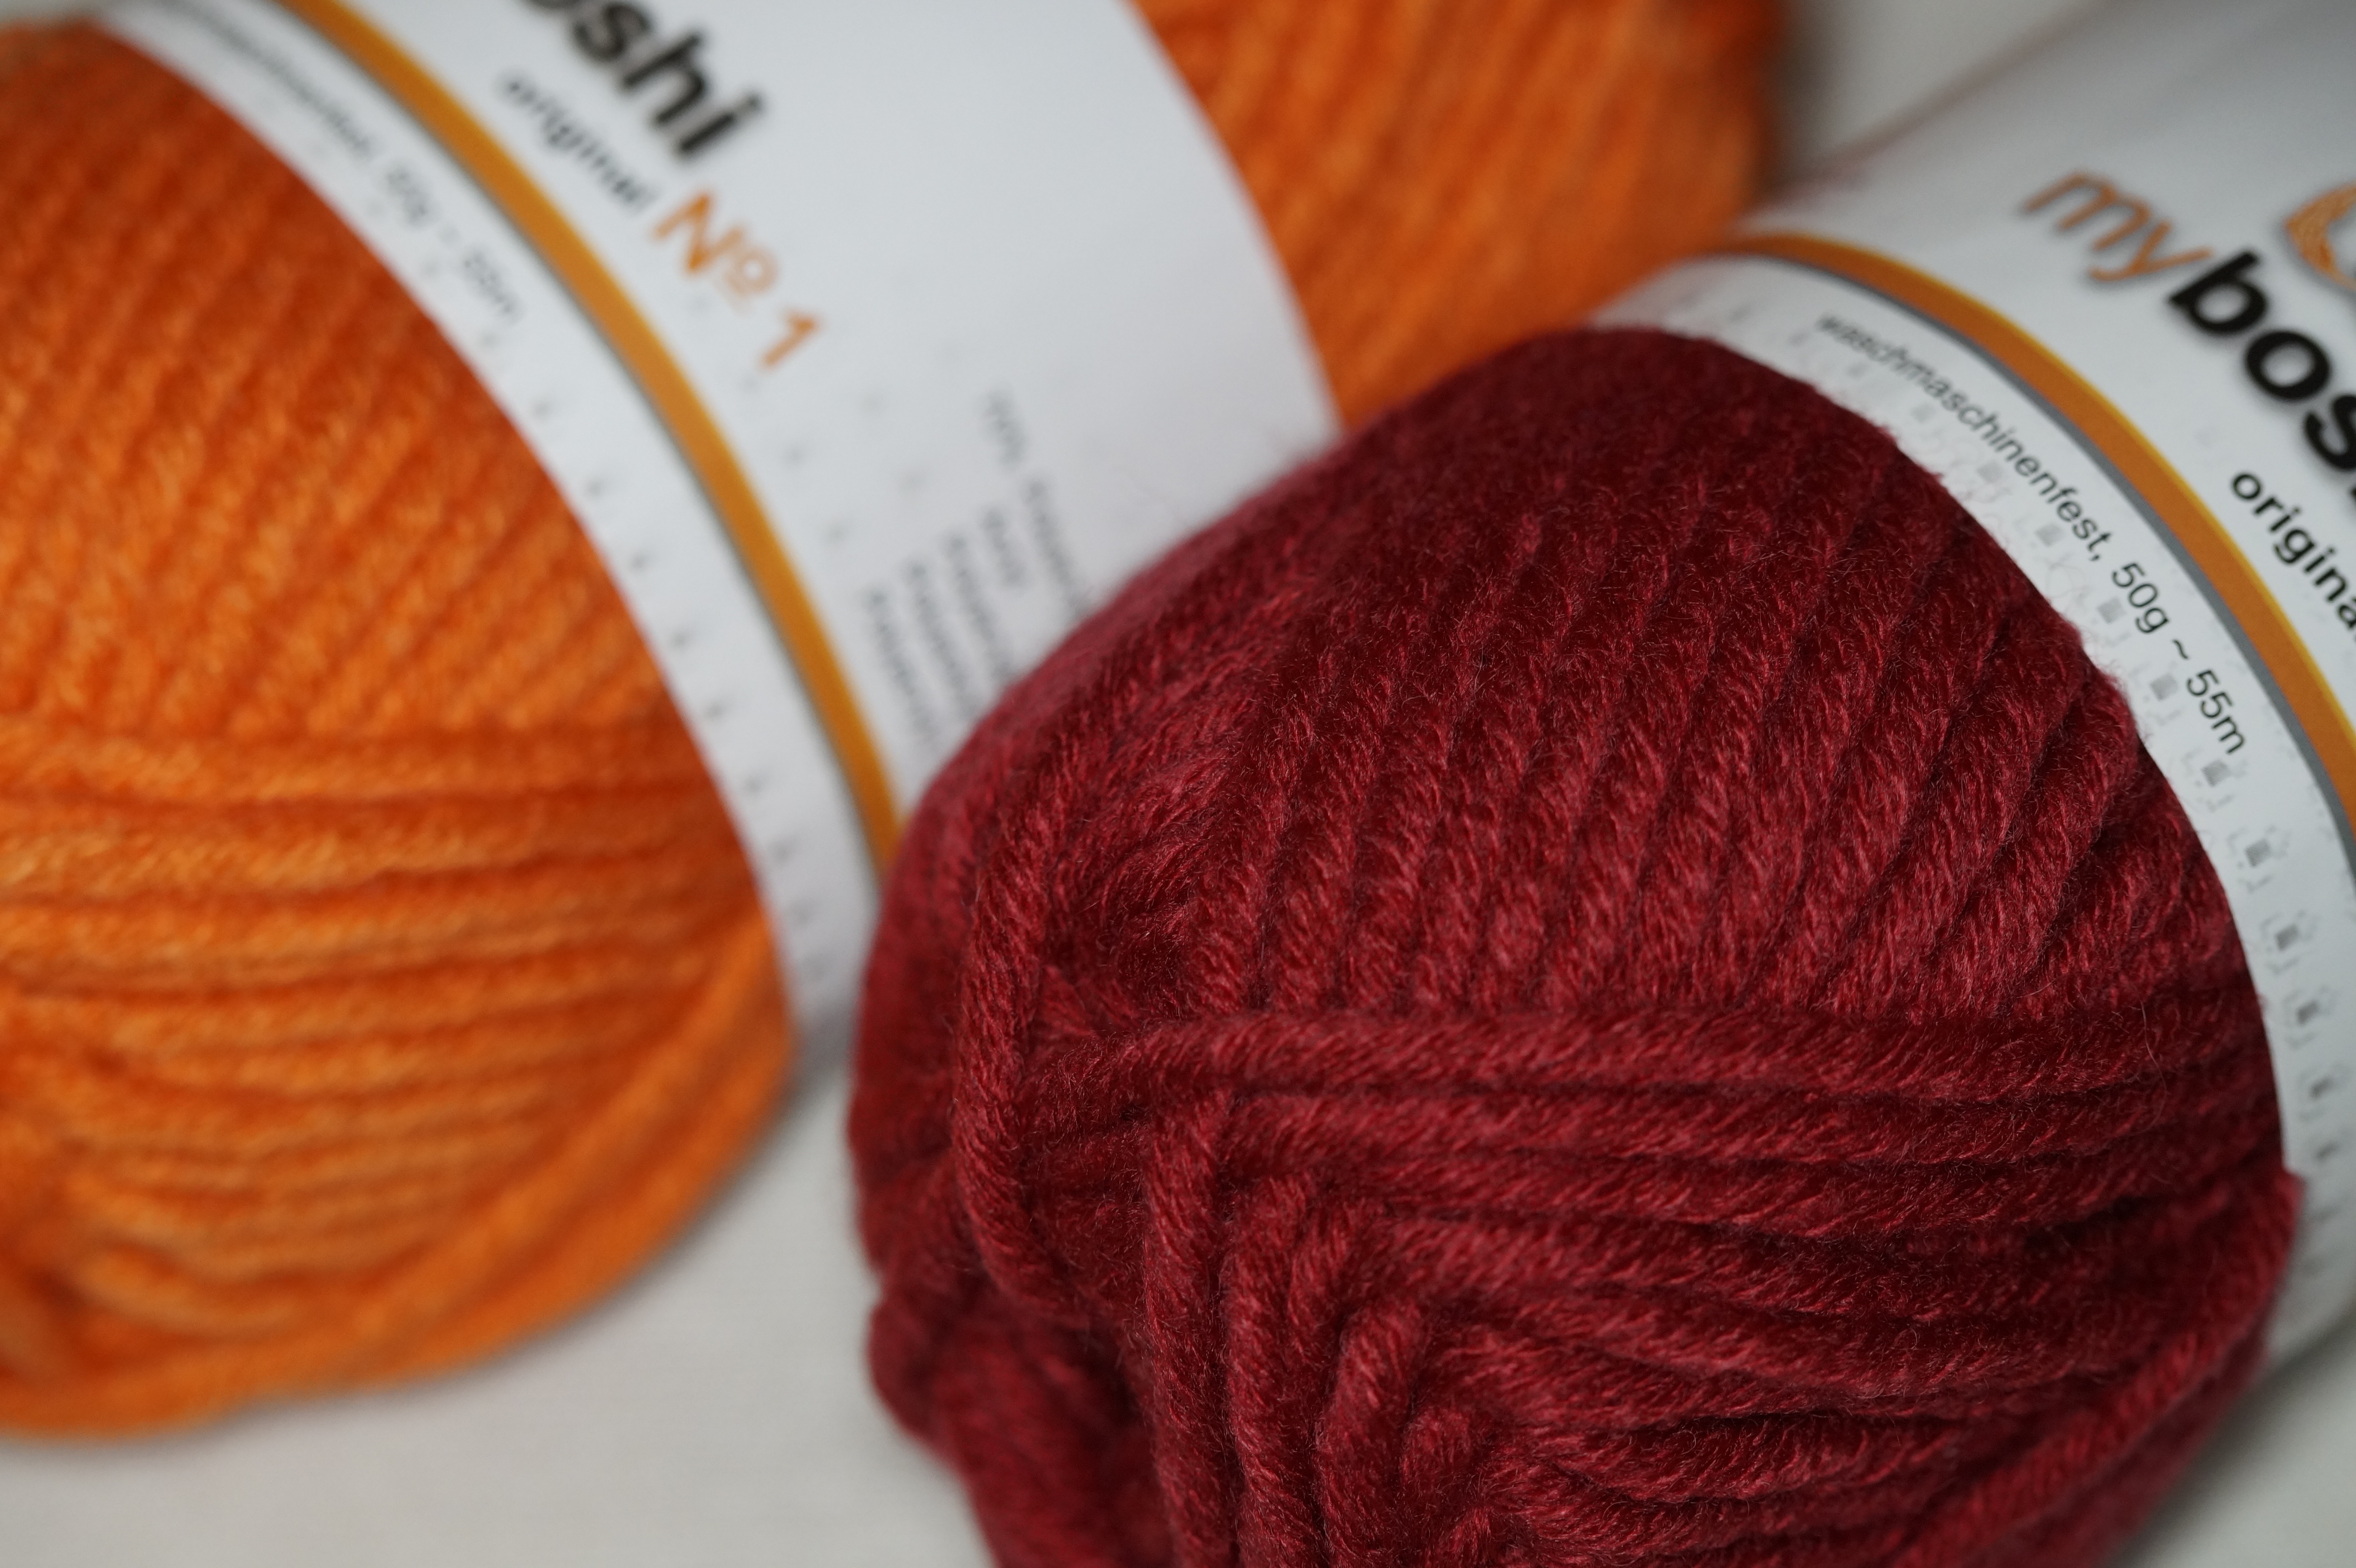 orange and red yarn spool